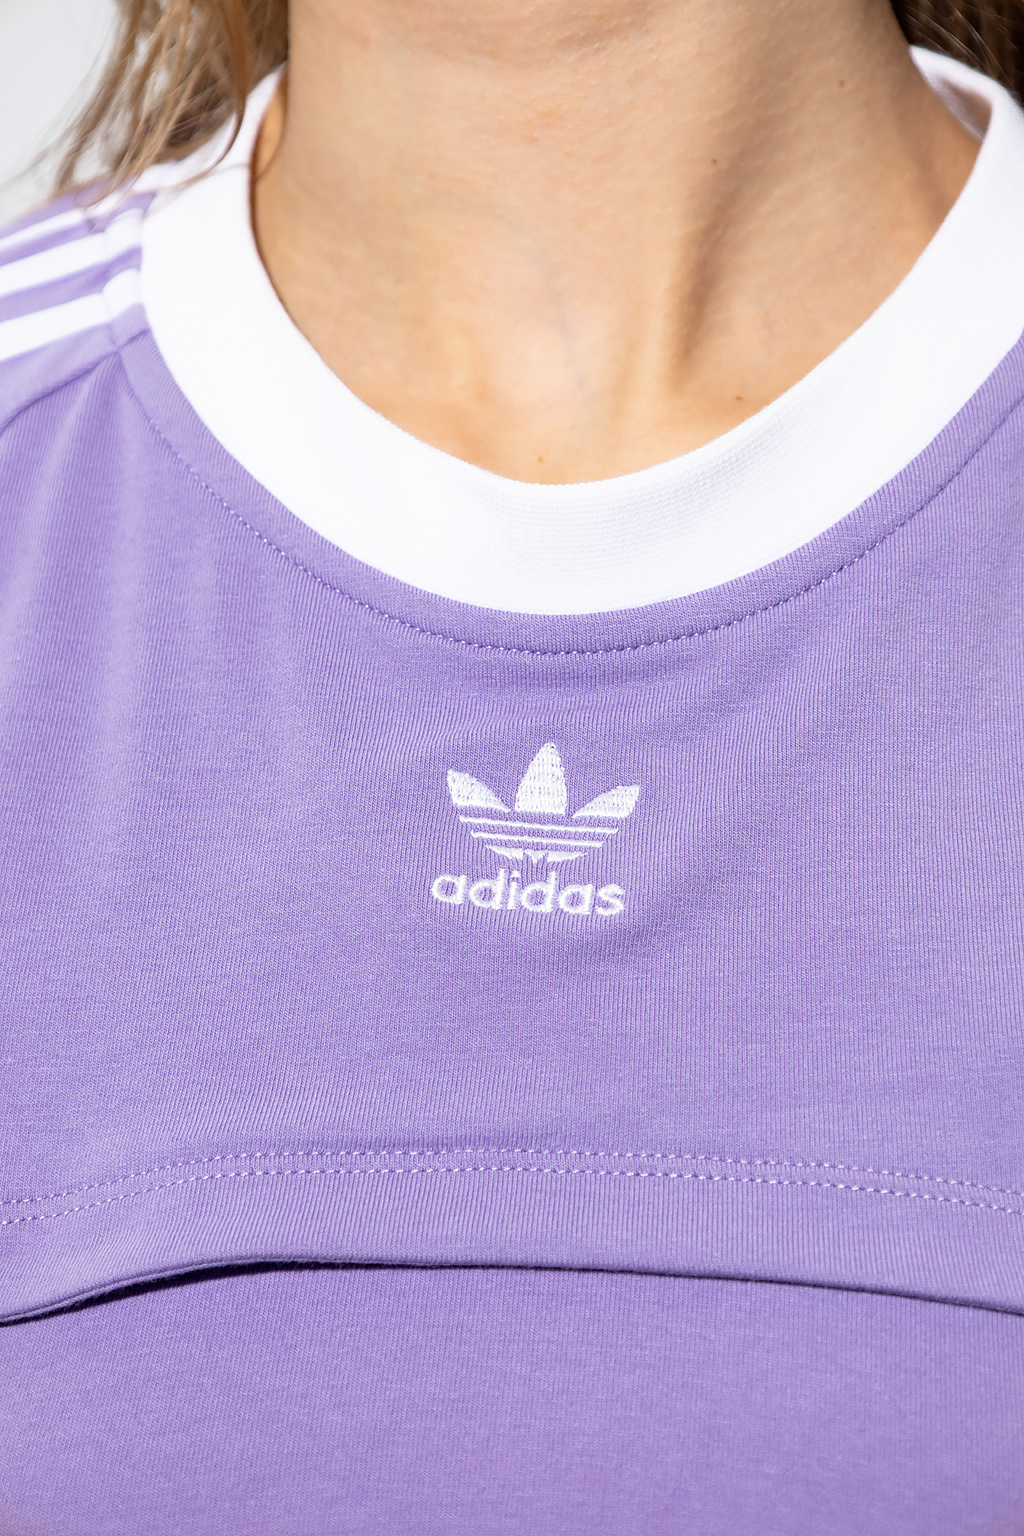 ADIDAS Originals Two-layered top with logo | Women's Clothing | Vitkac